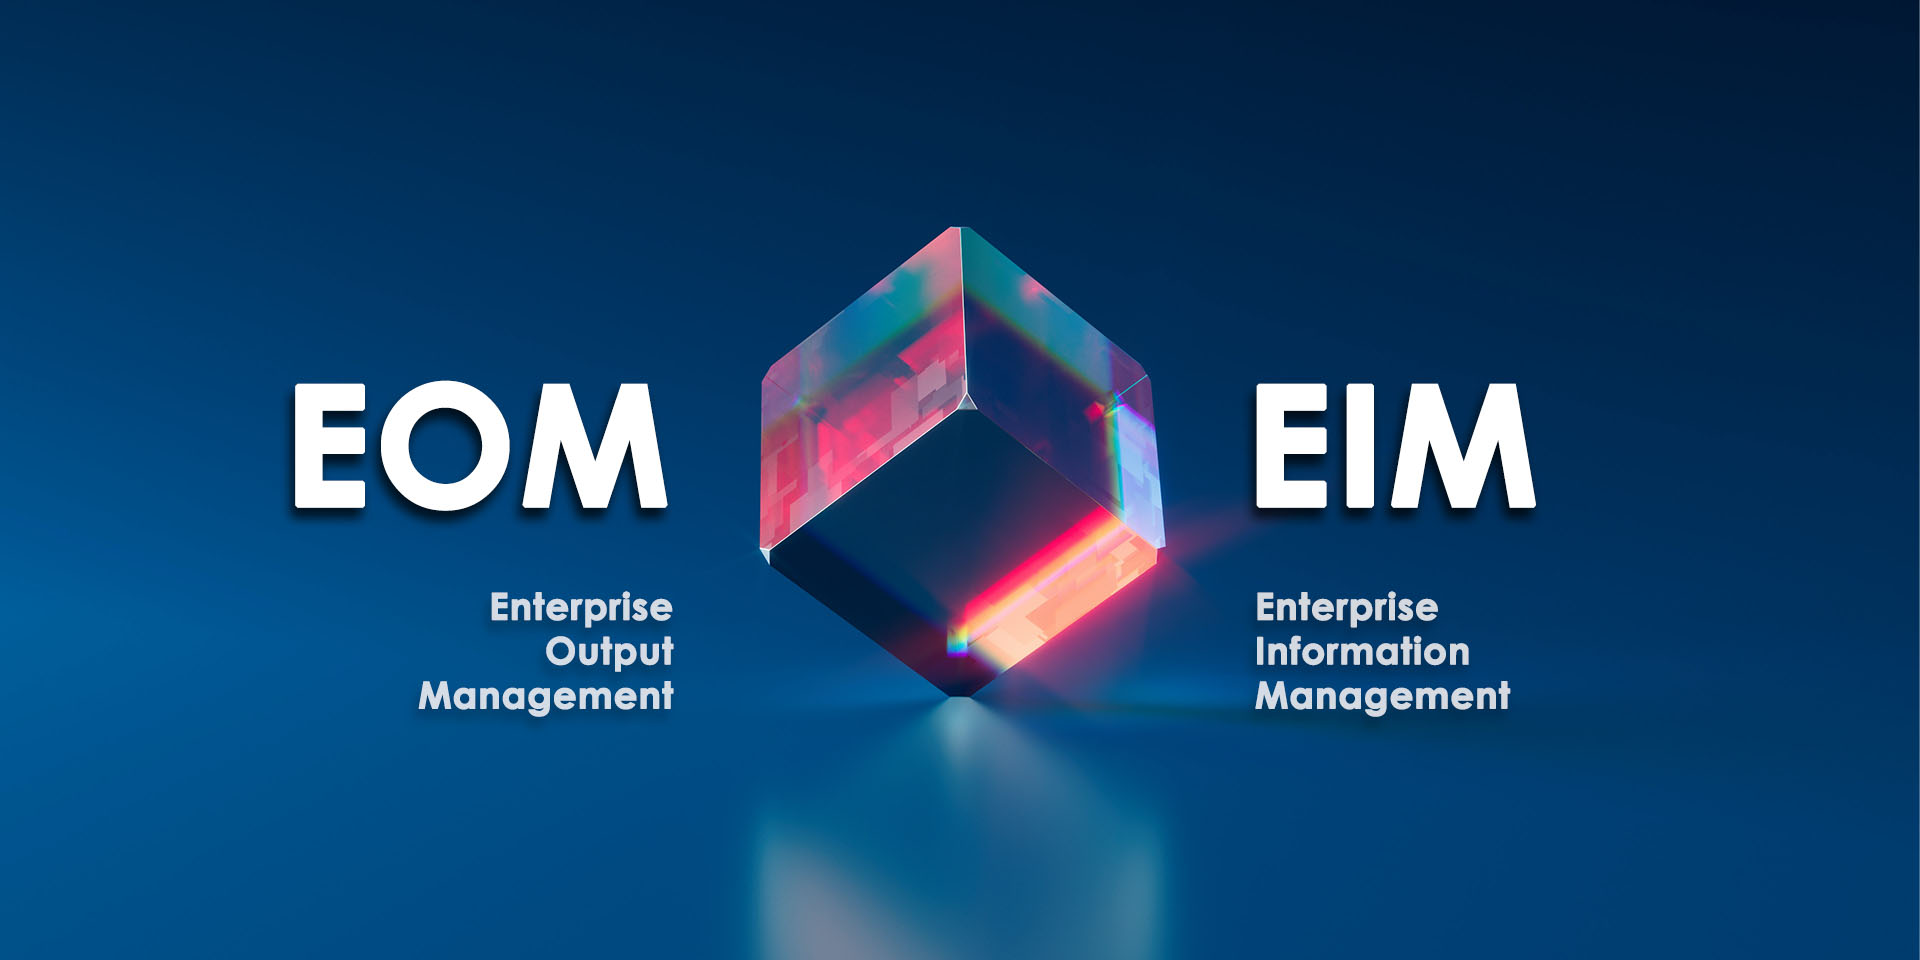 To understand Enterprise Output Management (EOM), it is first necessary to understand the fundamentals behind it: Enterprise Information Management (EIM).